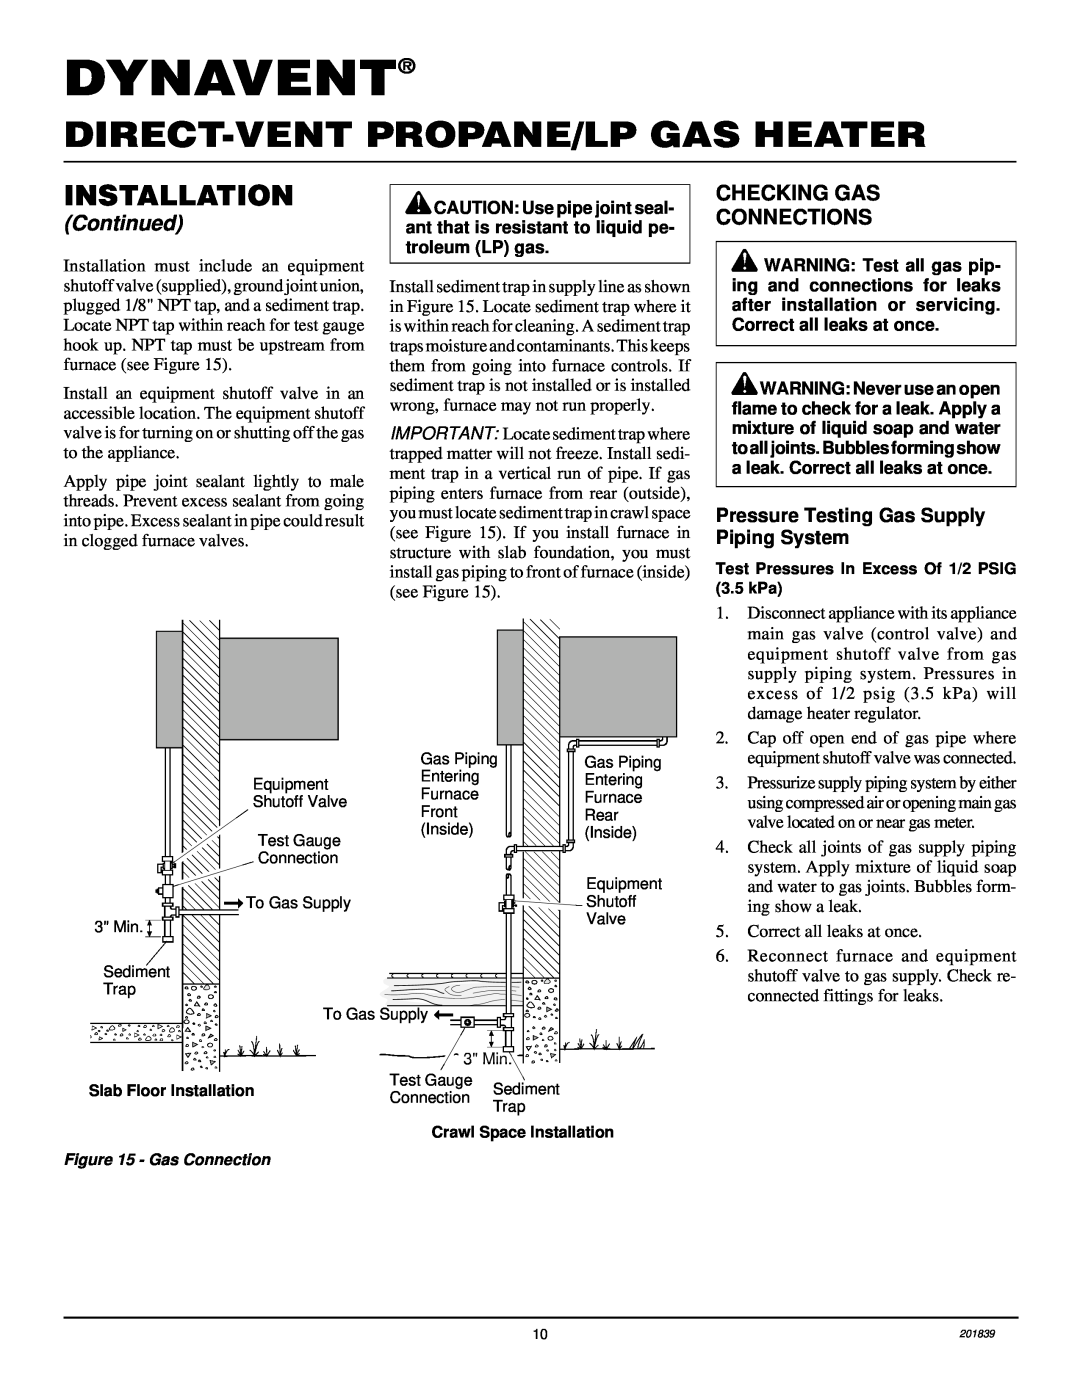 Desa DNV25PB, DNV40PB installation manual Dynavent, Direct-Ventpropane/Lp Gas Heater, Installation, Continued 